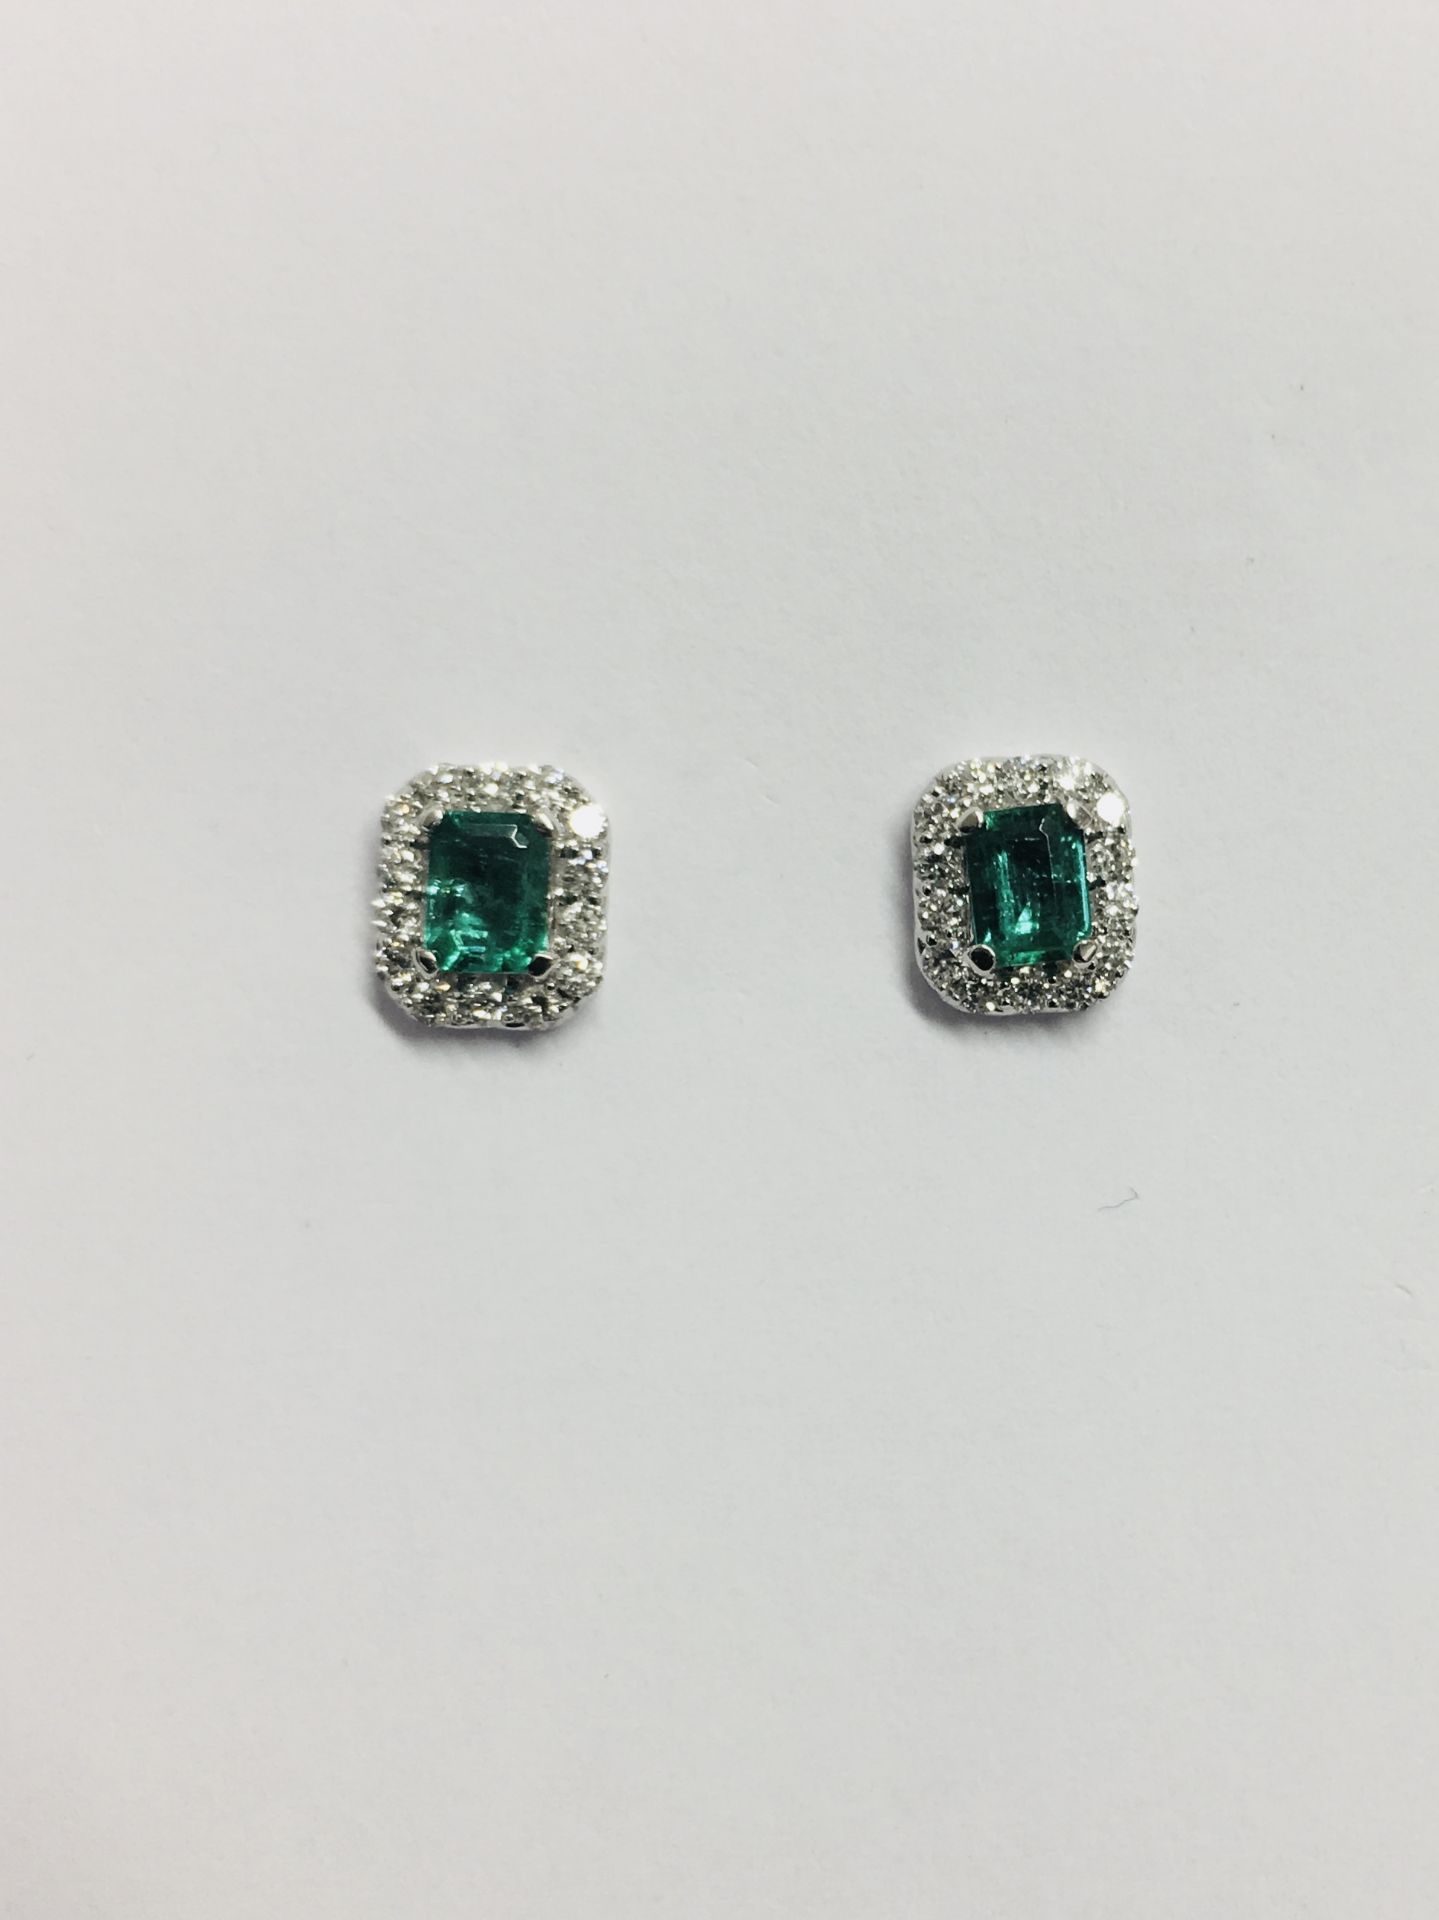 18ct white gold emerald diamond stud earrings,0.76ct natural emerald,0.26ct brilliant cut diamonds,g - Image 4 of 4